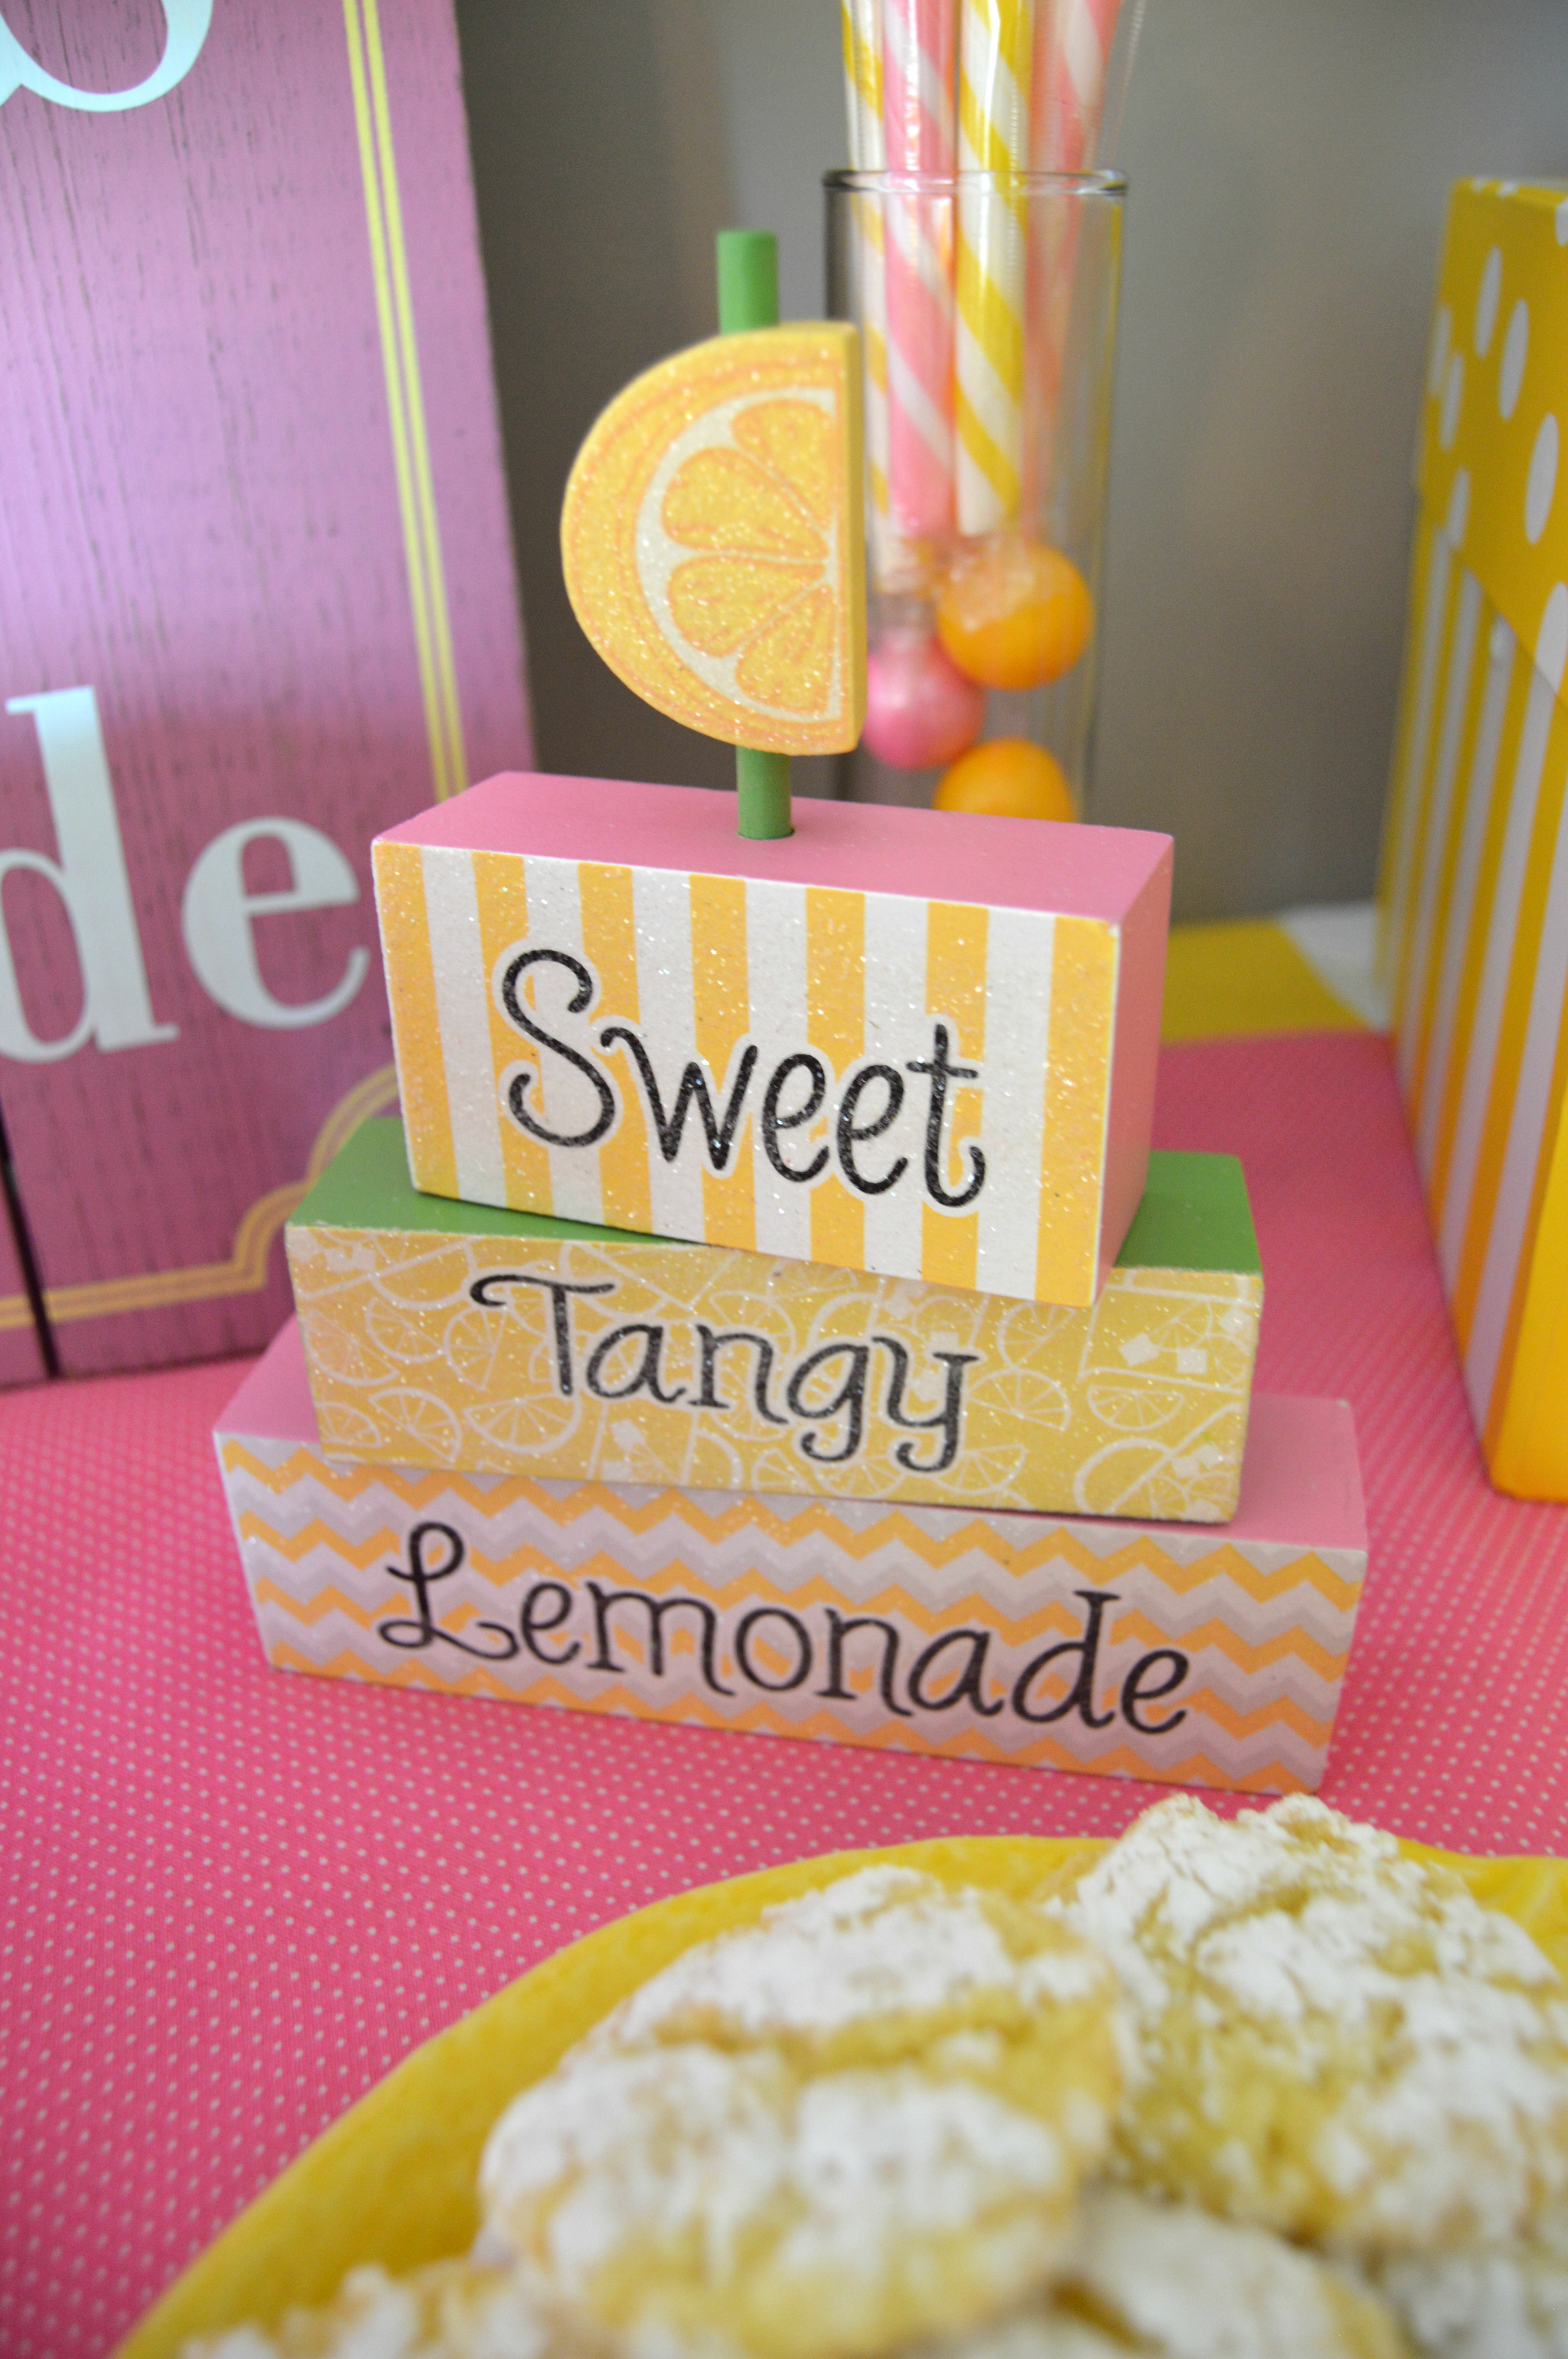 Lemonade Party - Celebrateindetail.com